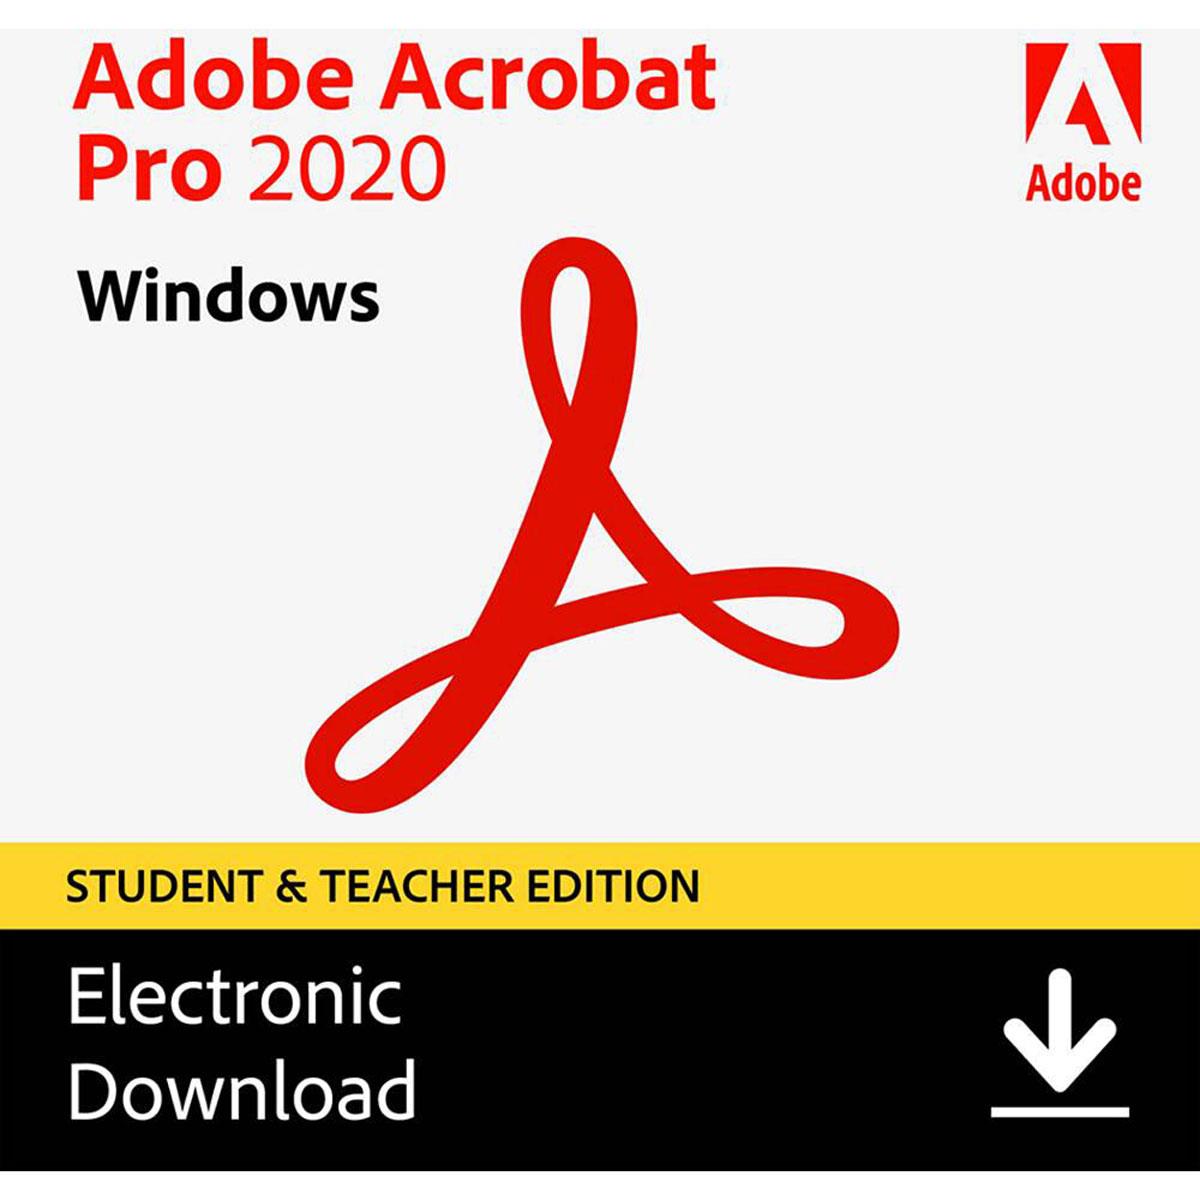 Adobe Acrobat Pro 2020 Software for Windows, Student & Teacher Edition, Download -  65312078